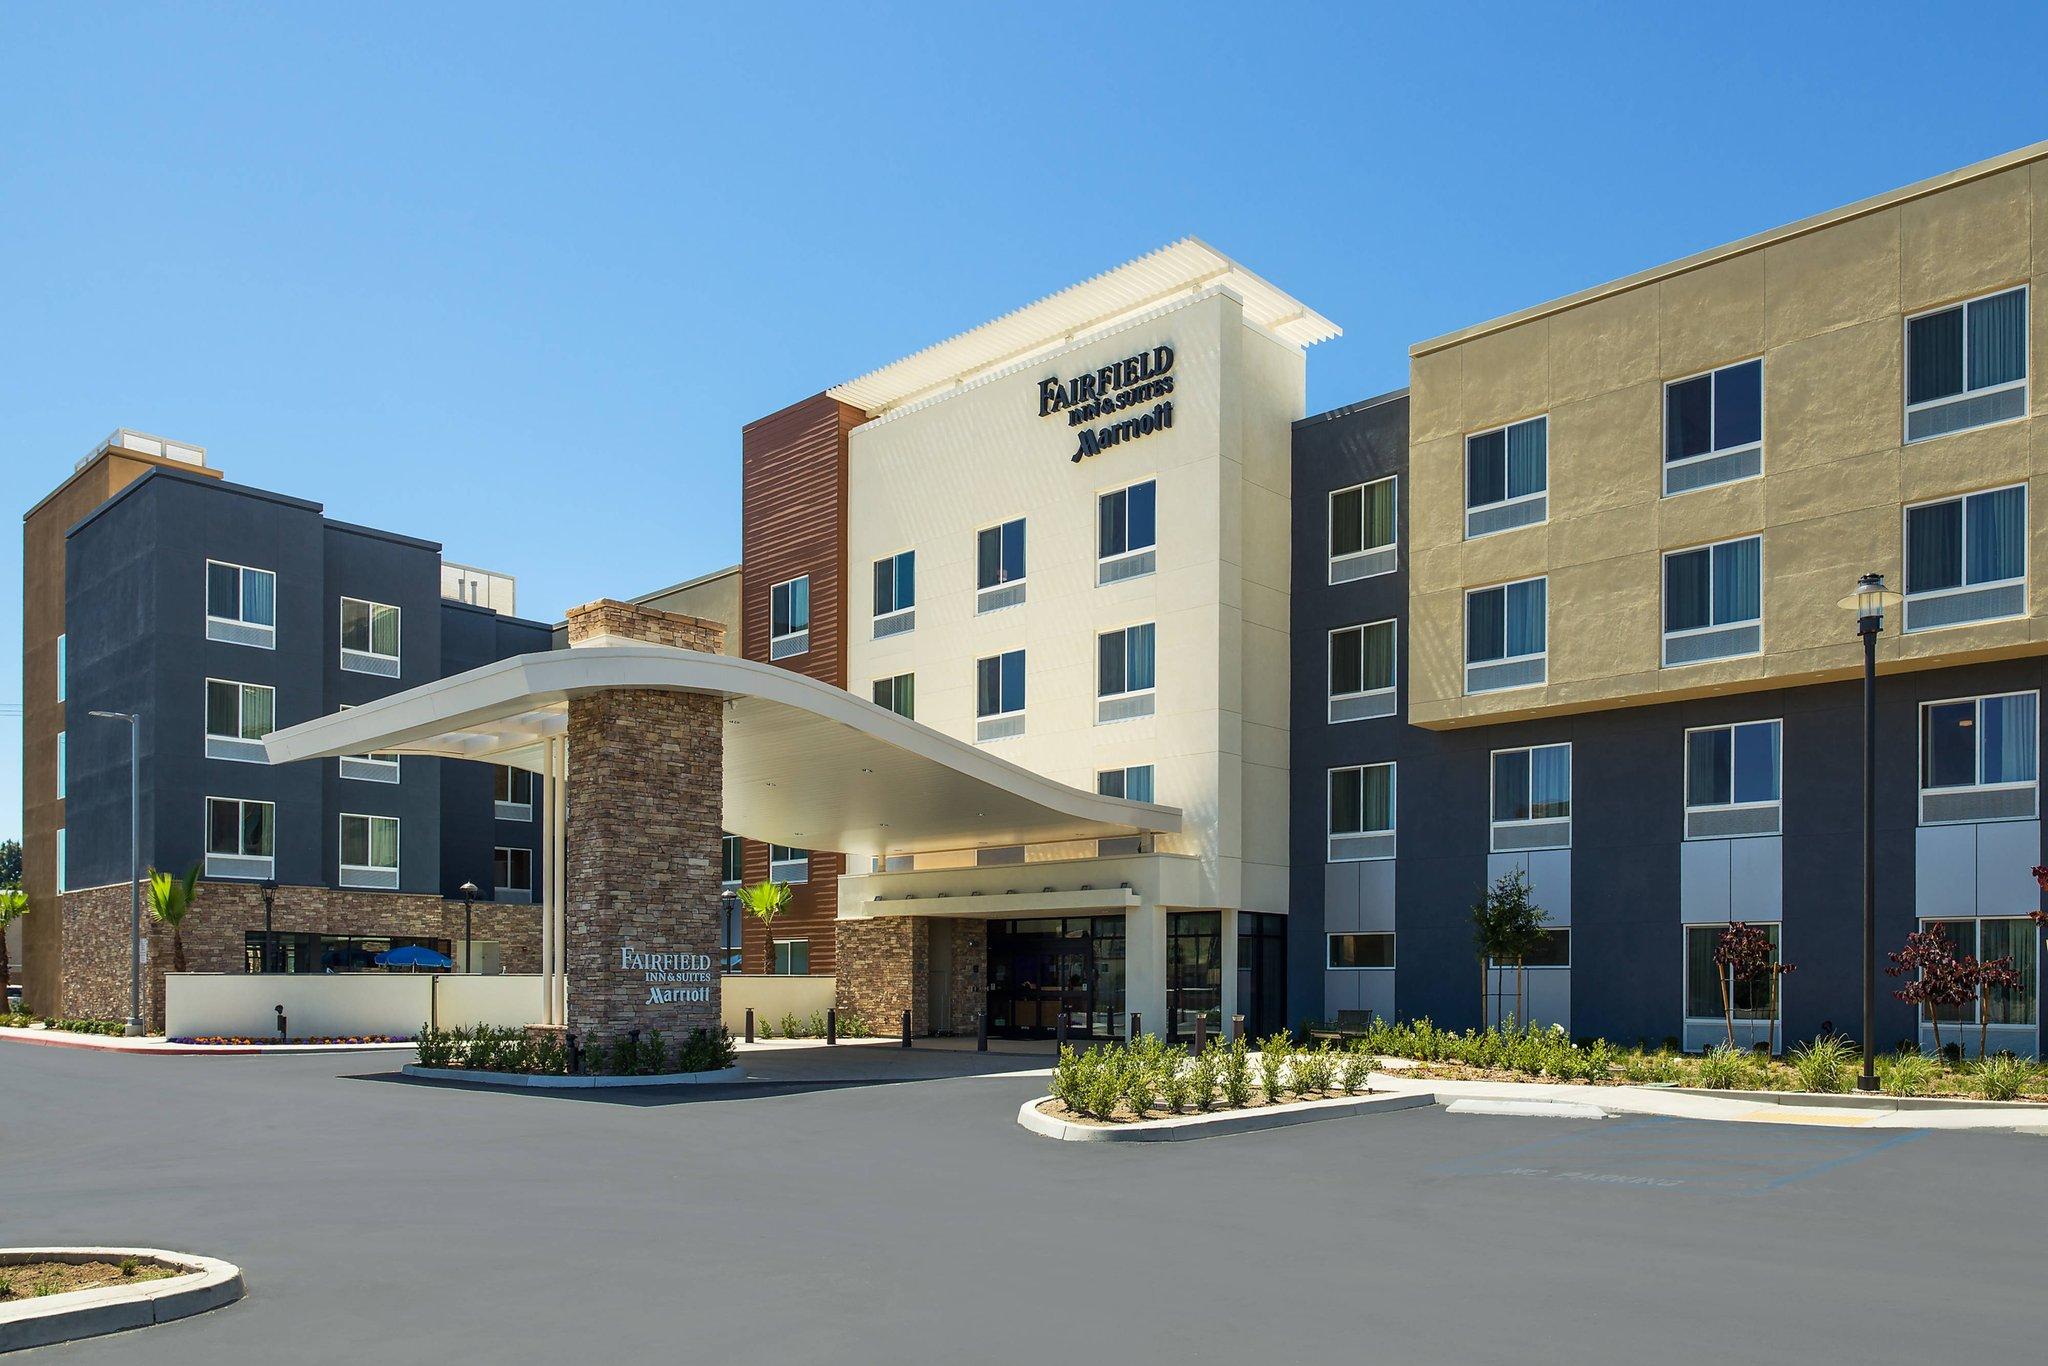 Fairfield Inn & Suites San Diego North/San Marcos in San Marcos, CA